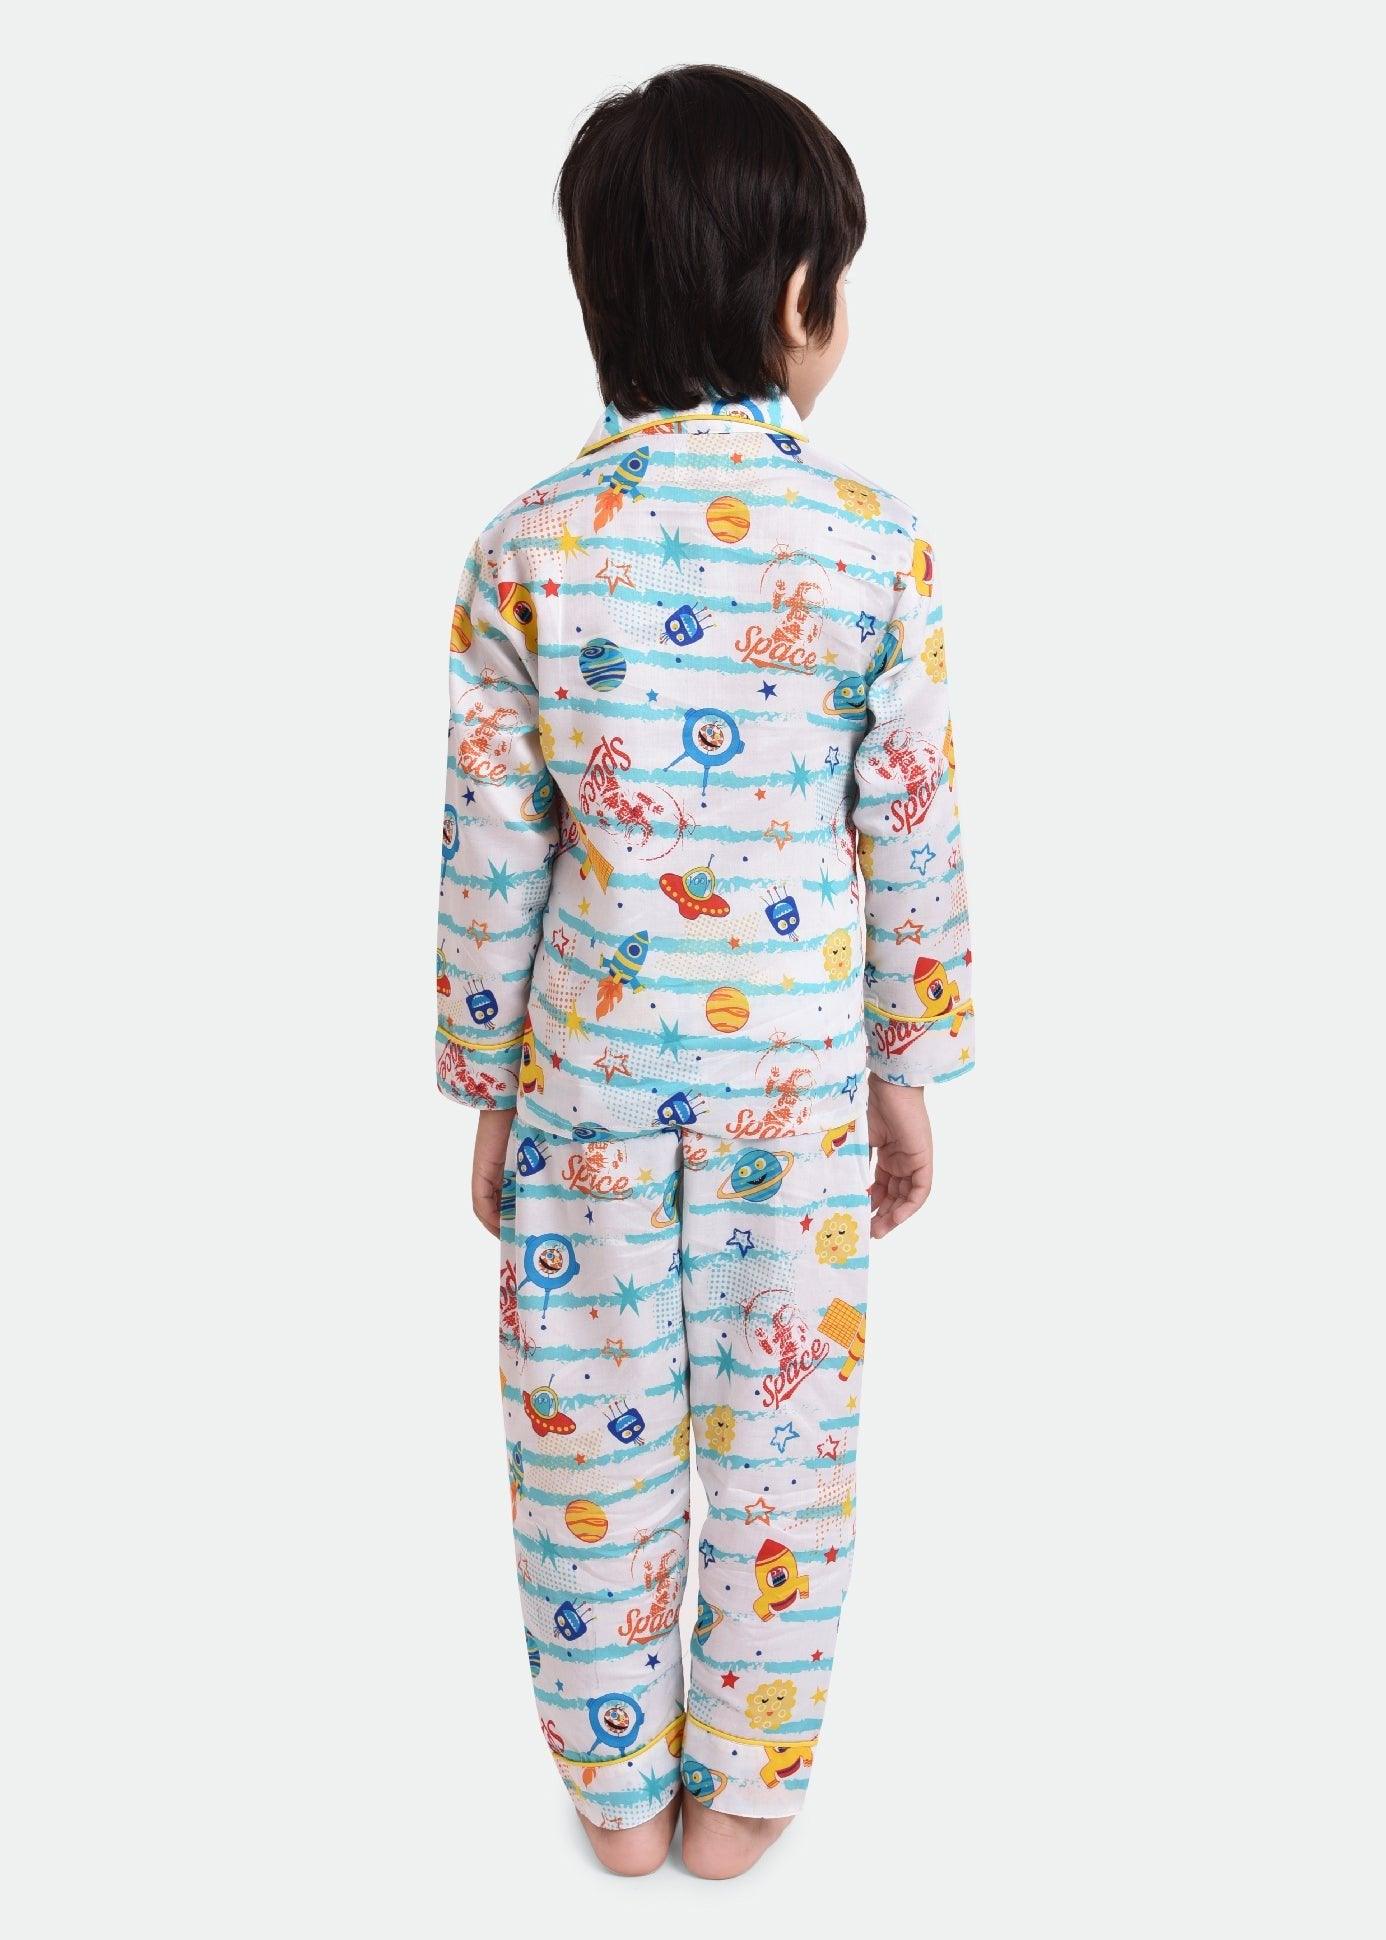 Space Enthusiast Printed Night Suit Set - koochi Poochi